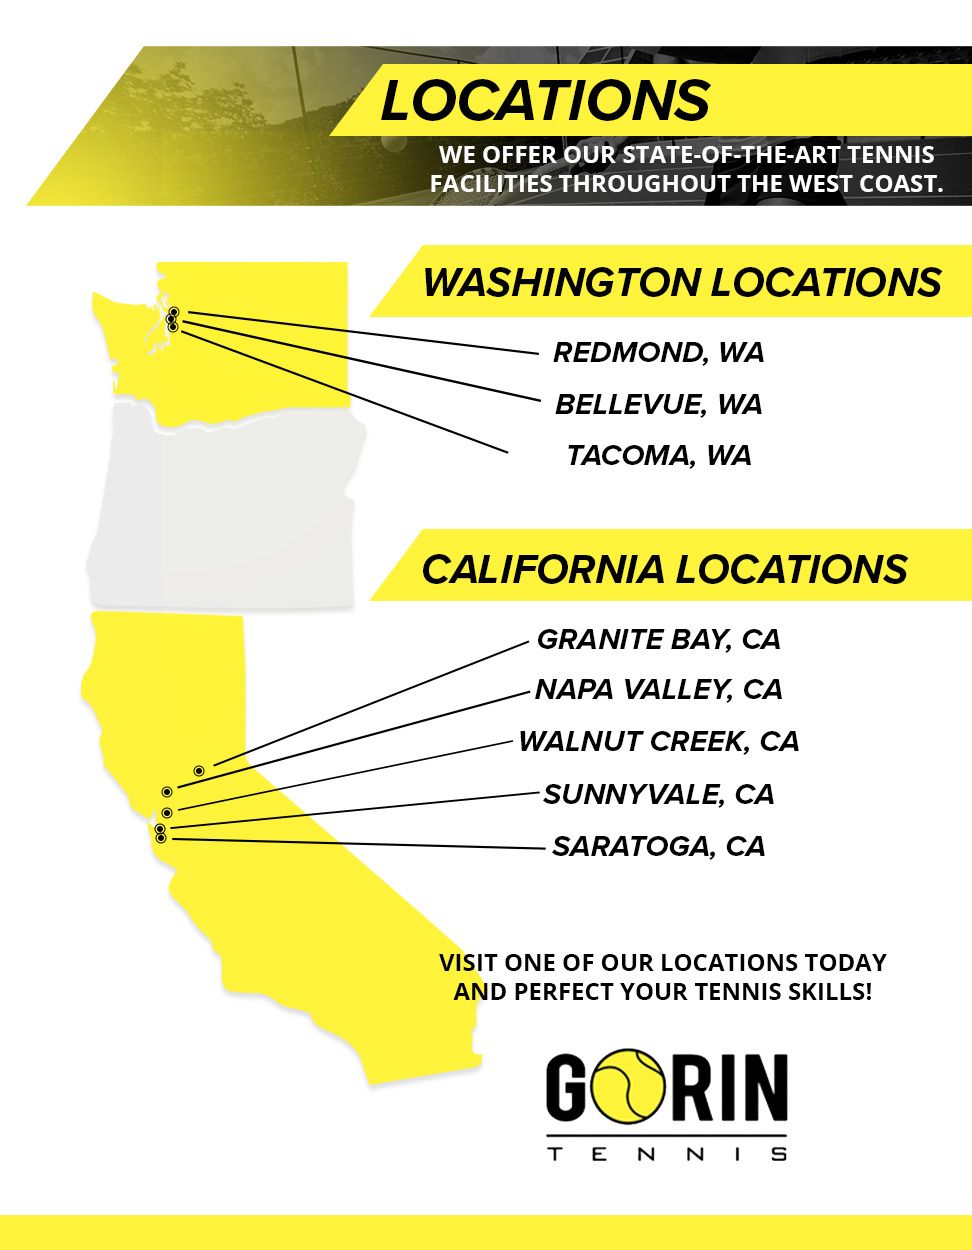 Gorin_Locations Infographic.jpg